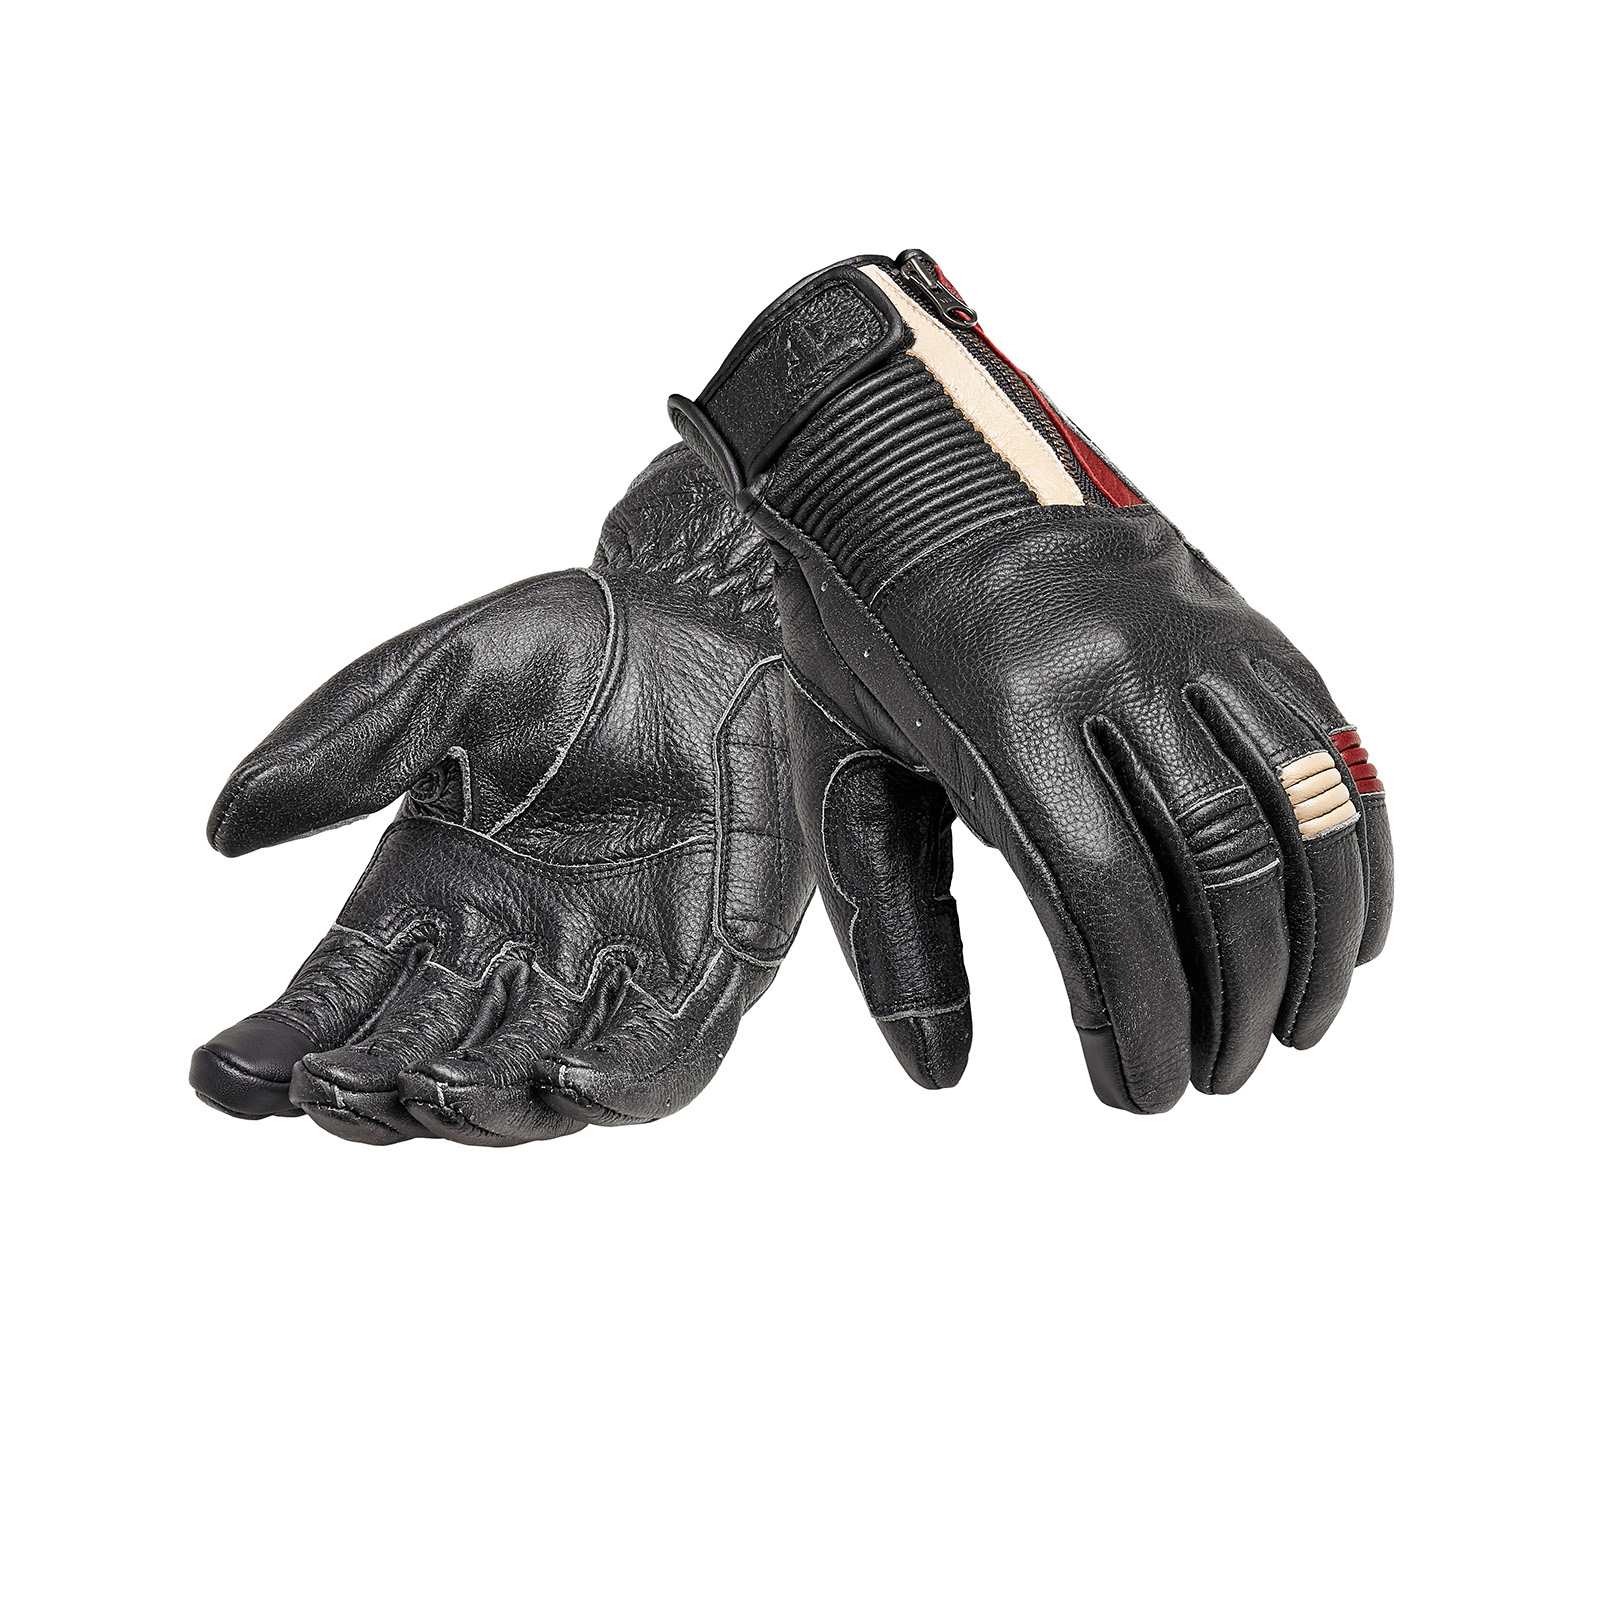 Raven Glove